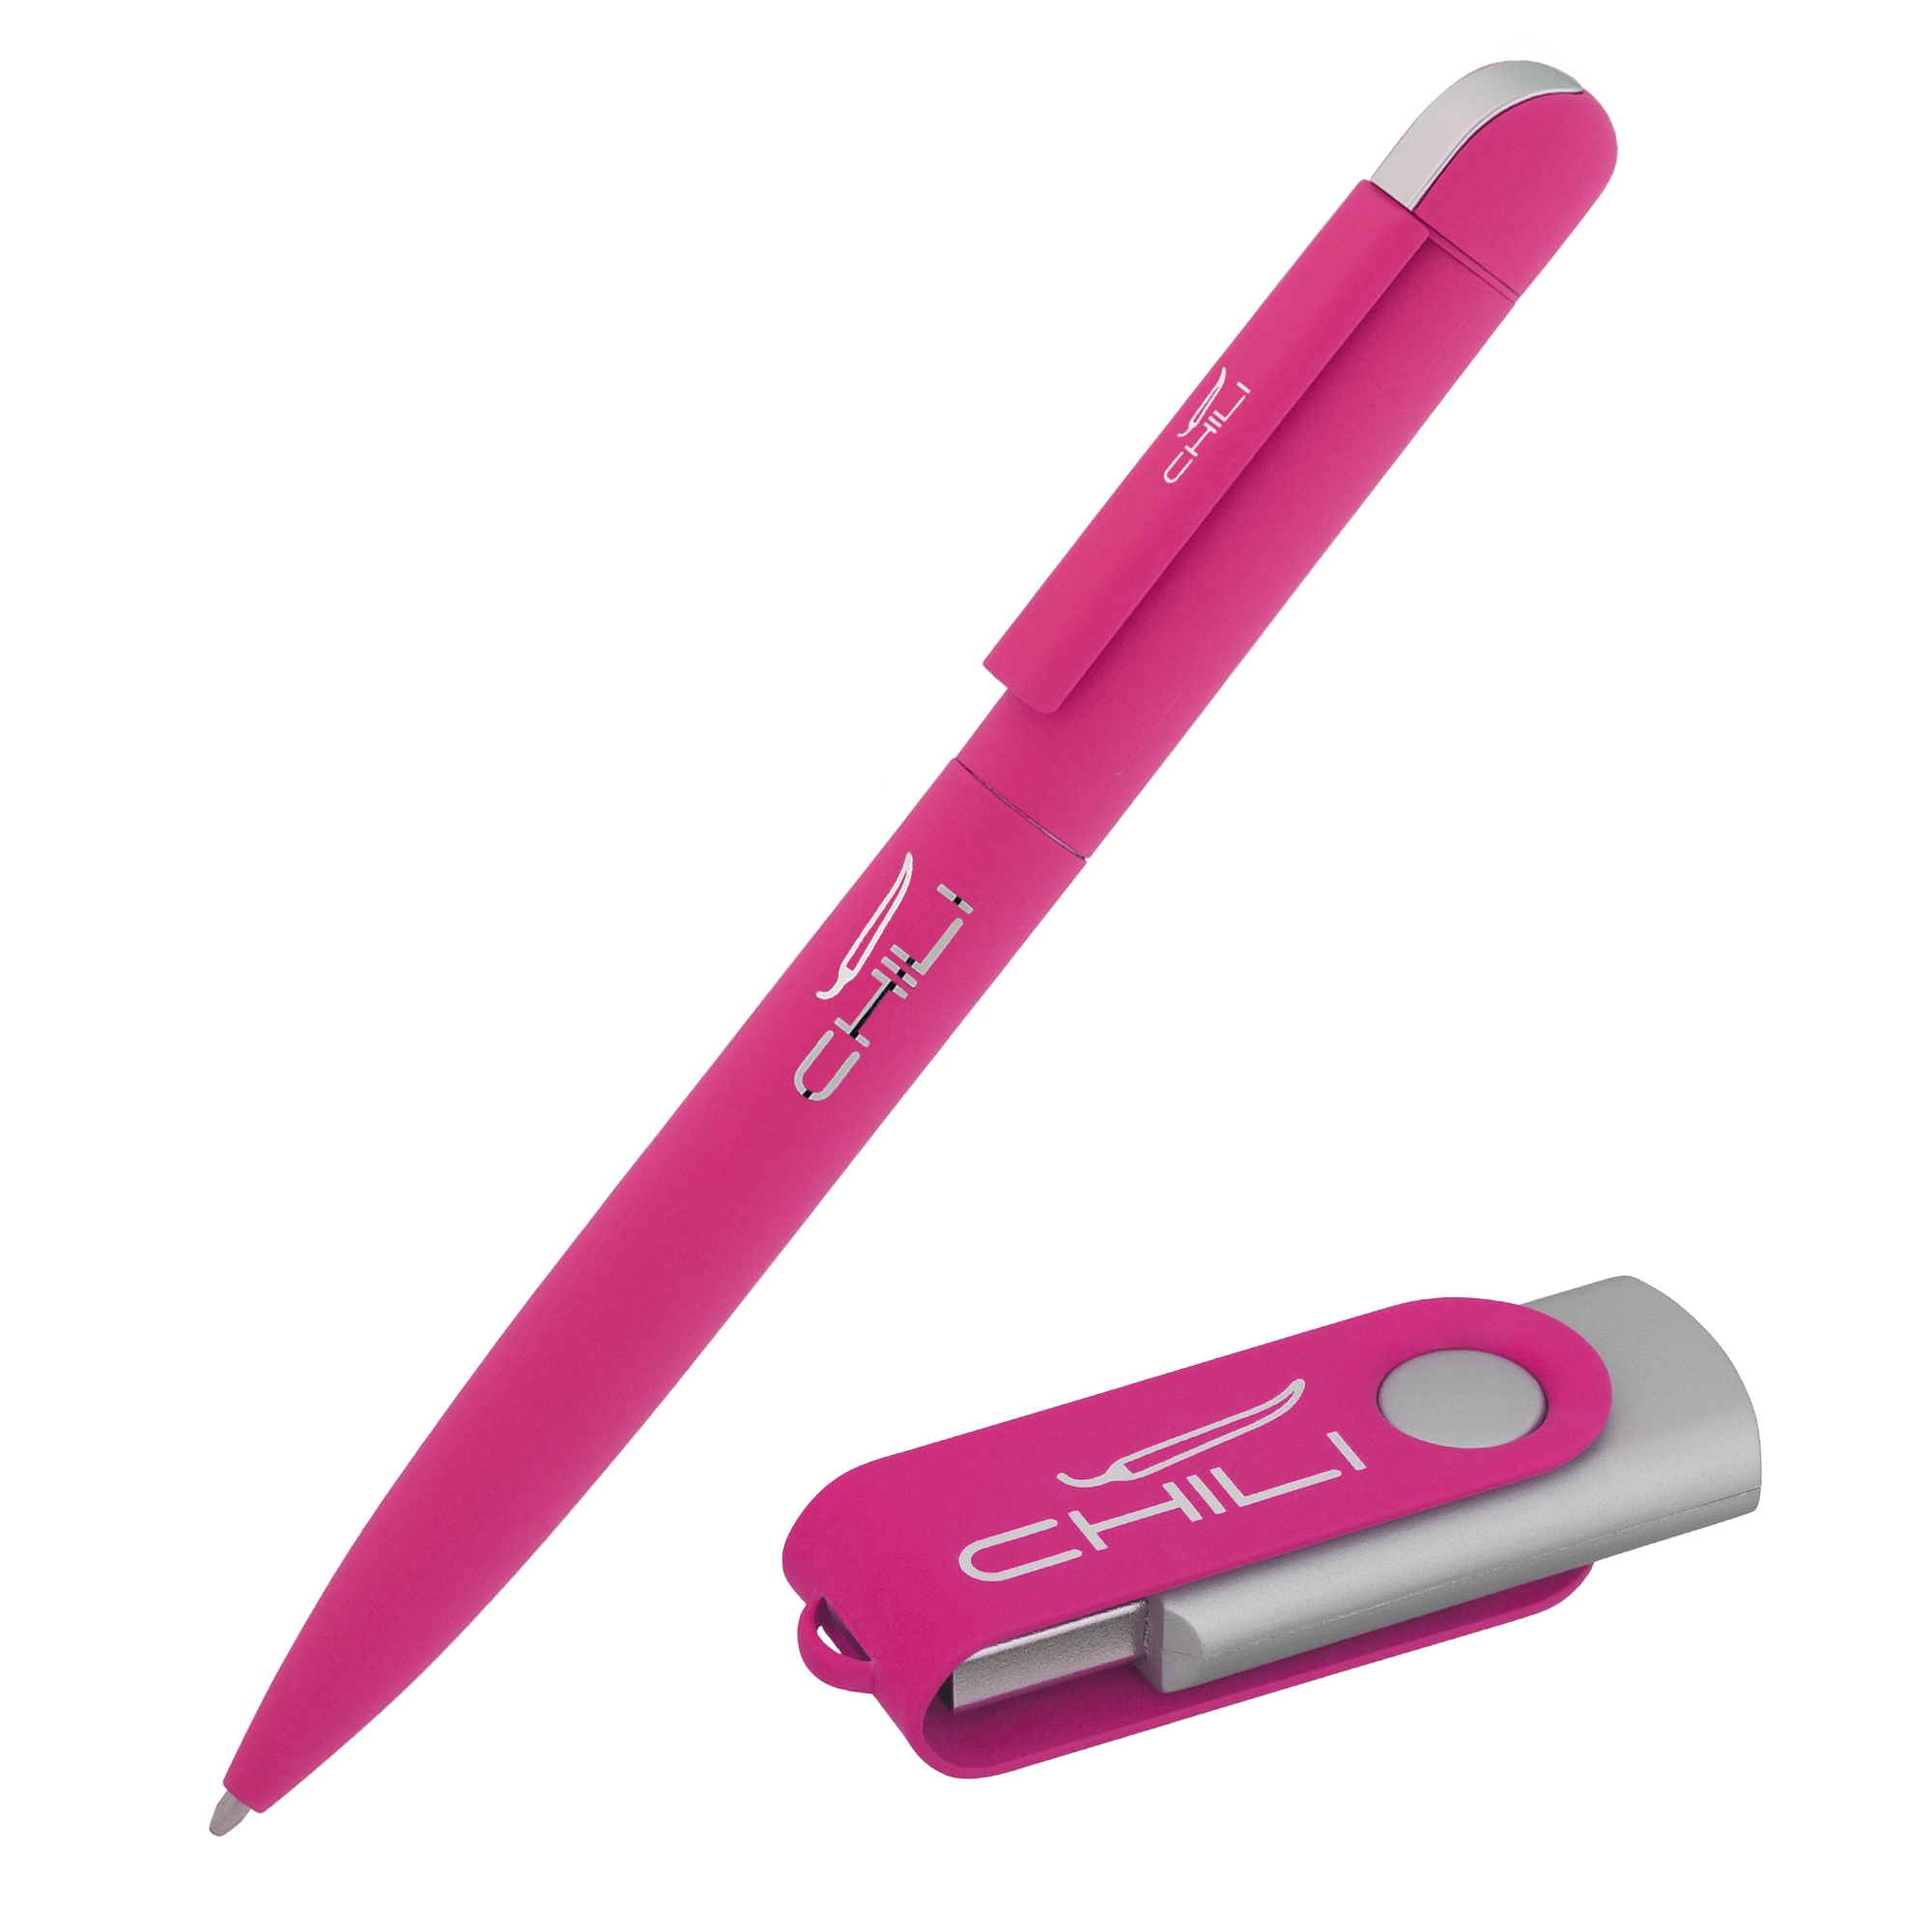 Набор ручка "Jupiter" + флеш-карта "Vostok" 8 Гб в футляре, покрытие soft touch#, розовый, металл/soft touch